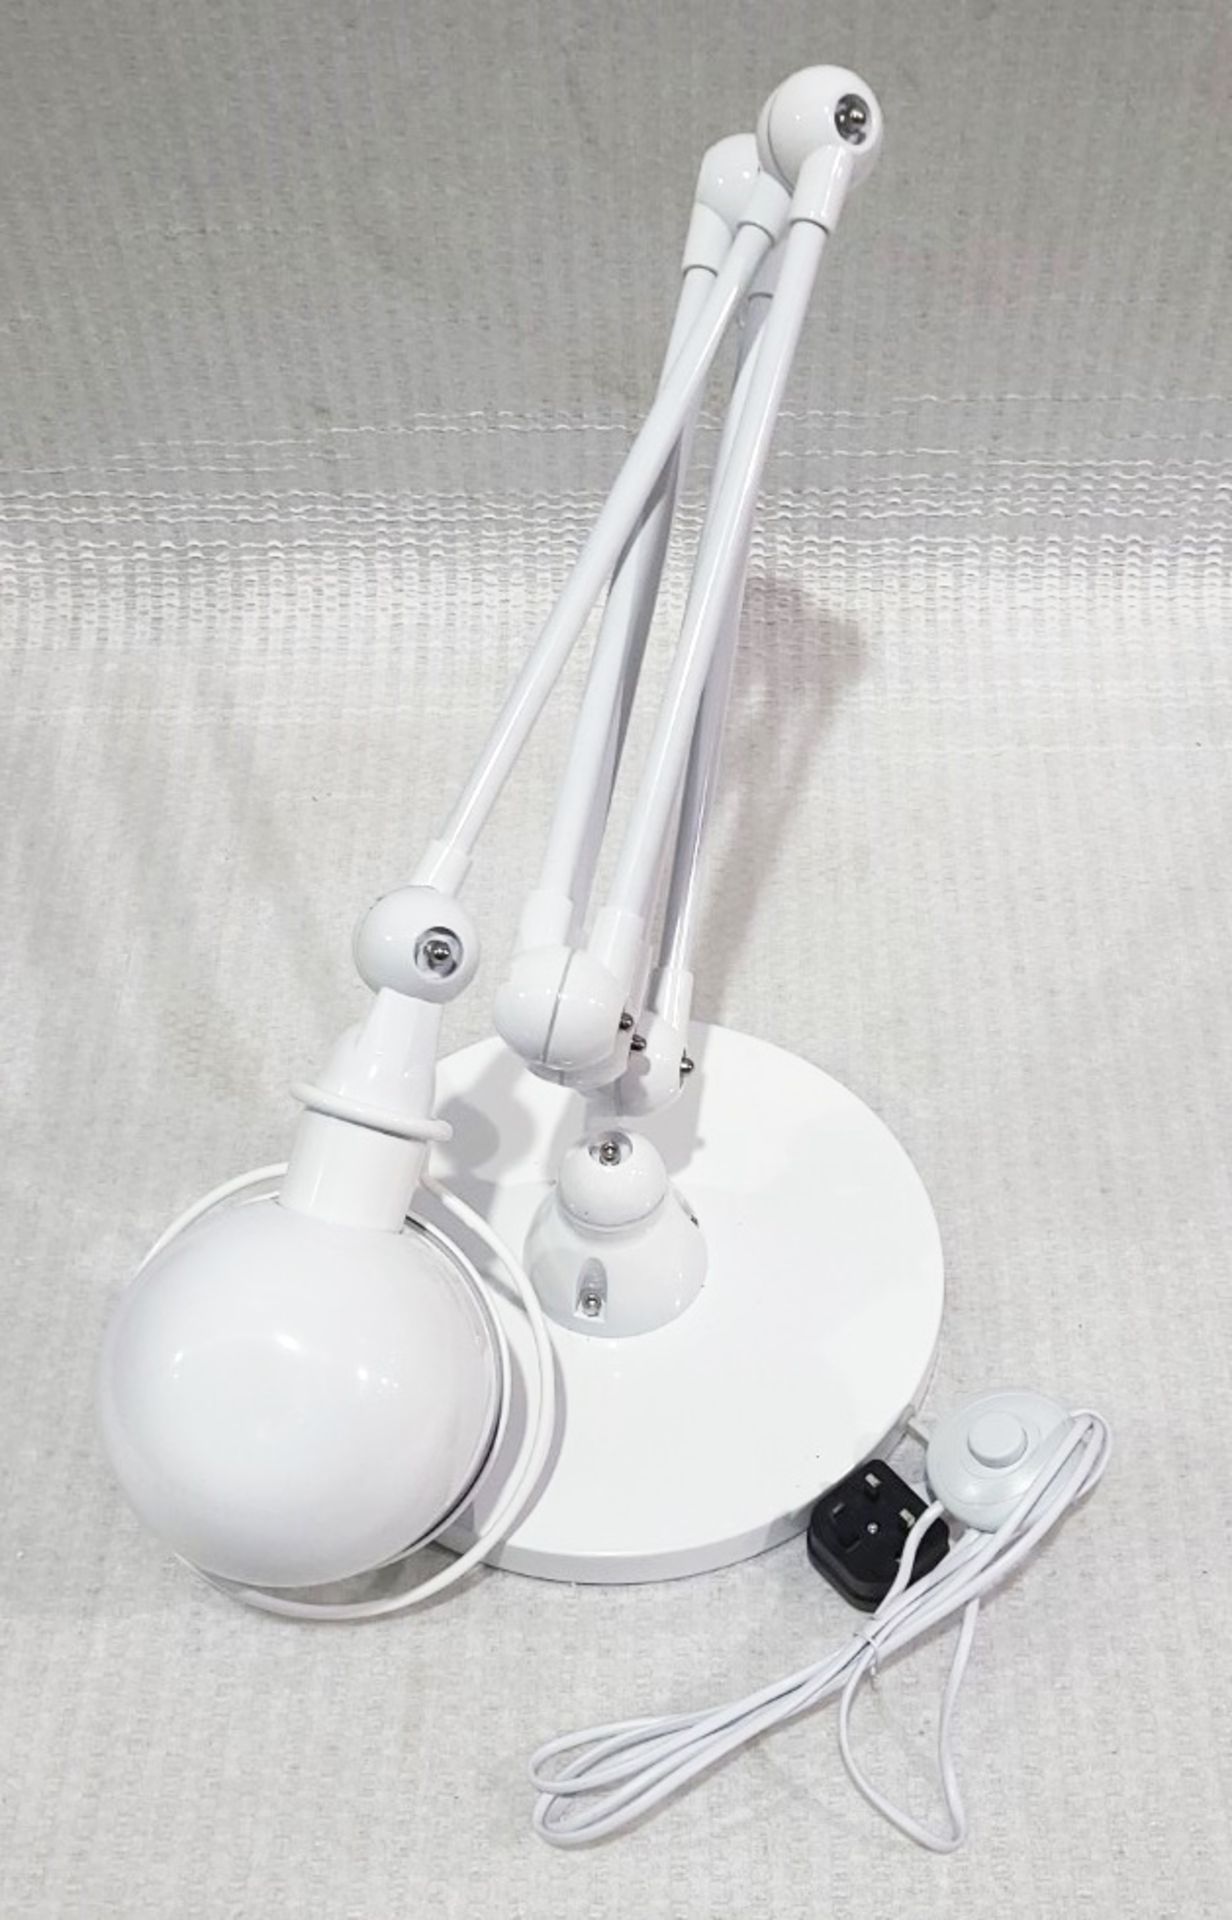 1 x BLUESUNTREE 'Jielde' Glossy White Steel Loft Floor Lamp With Six Adjustable Arms - Image 8 of 11